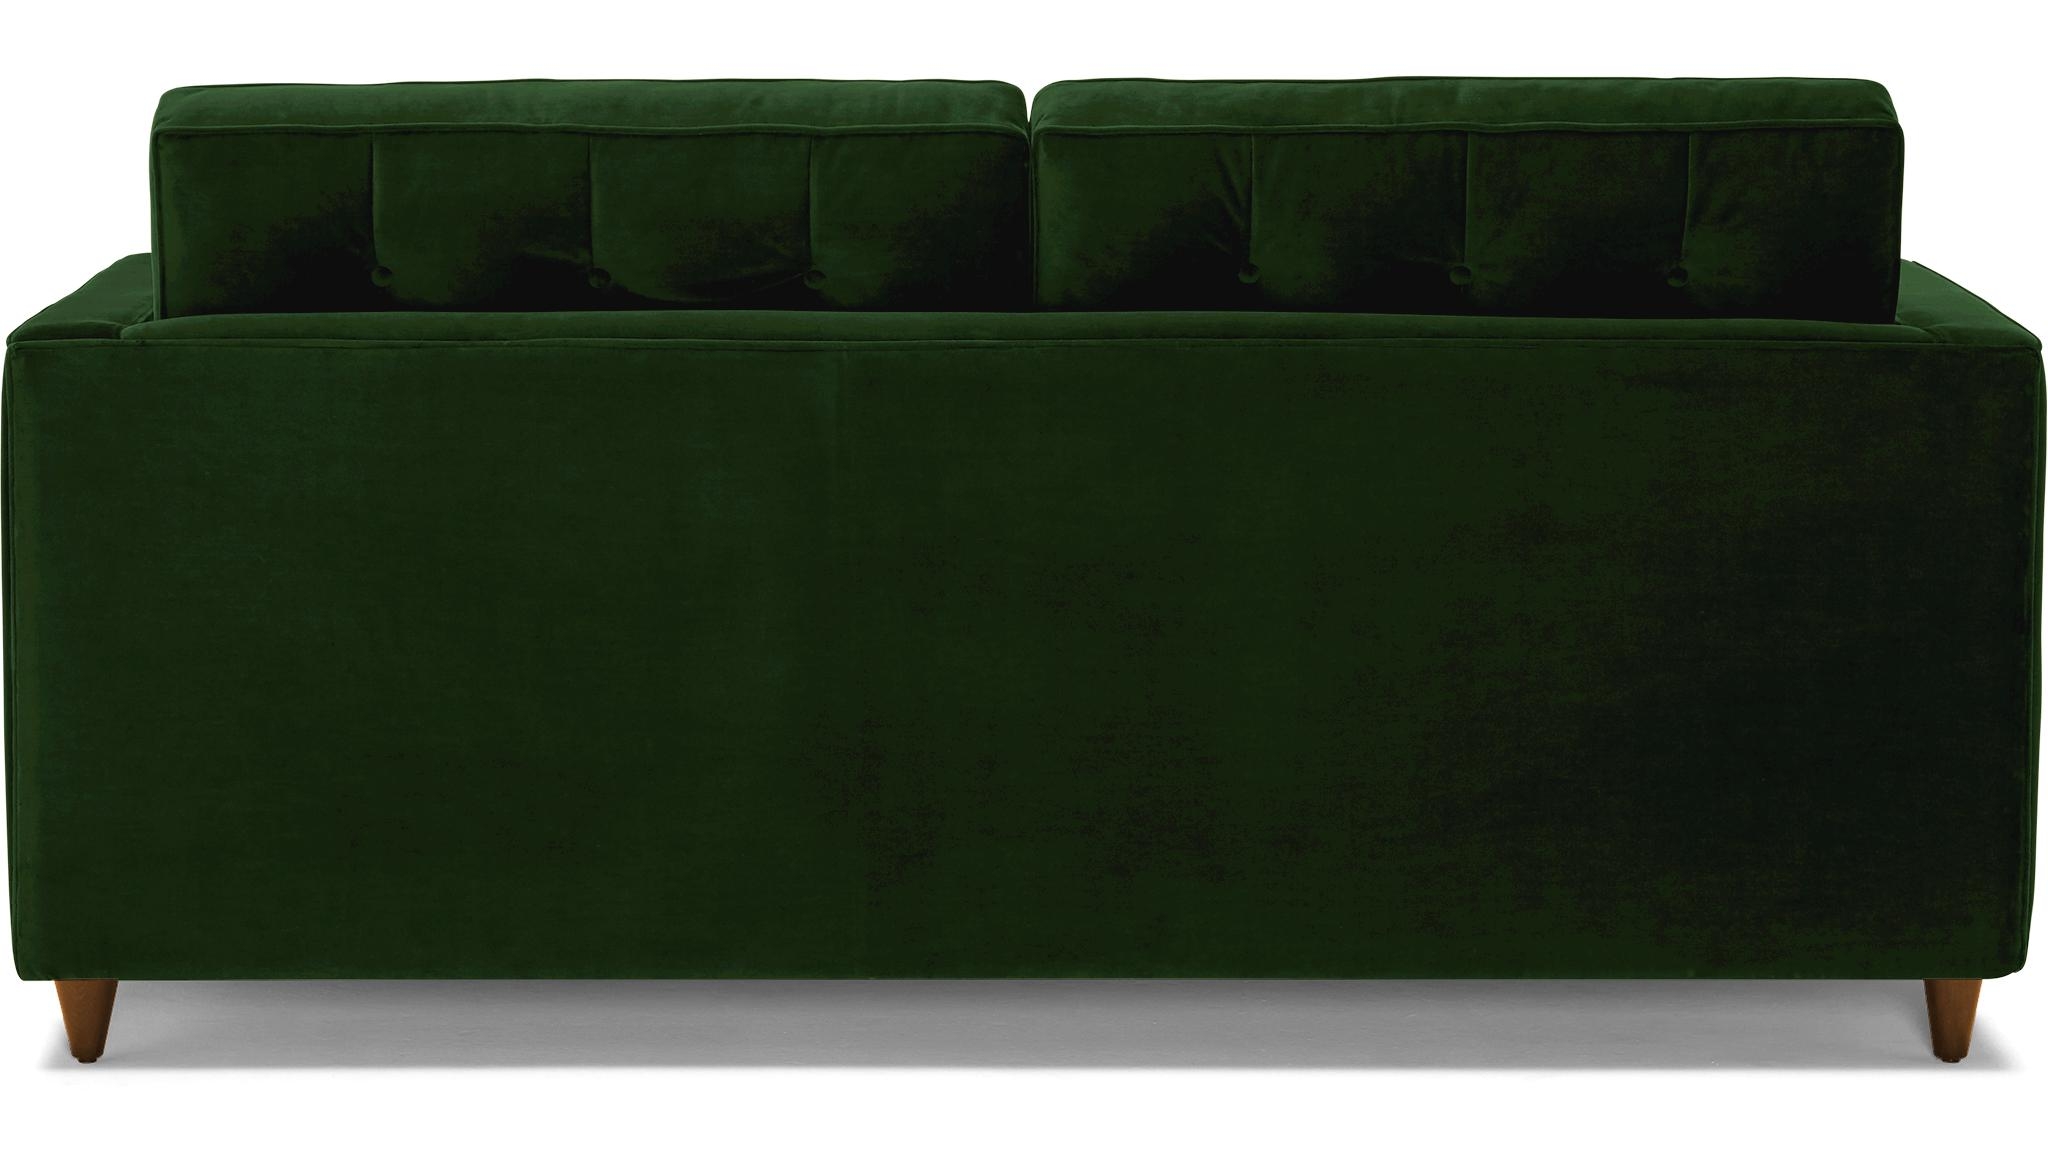 Green Braxton Mid Century Modern Sleeper Sofa - Royale Evergreen - Mocha - Image 4